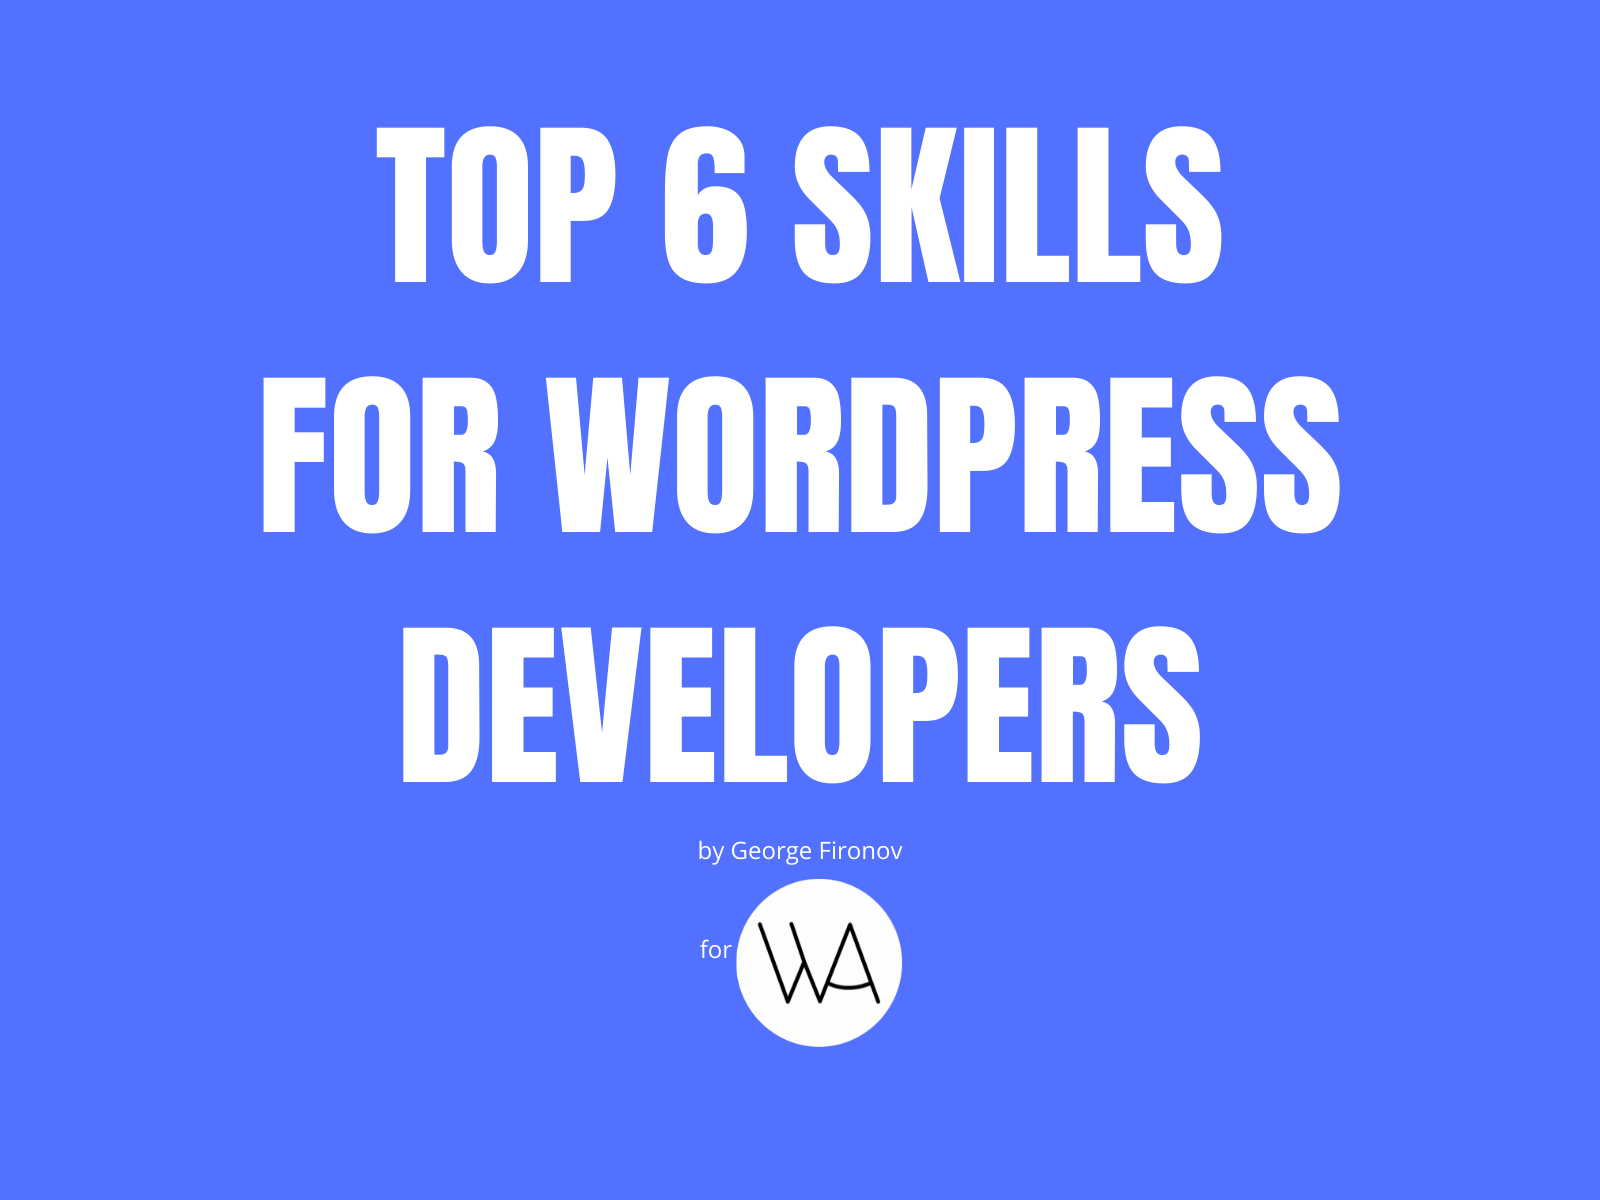 Top 6 skills for a WordPress Developer